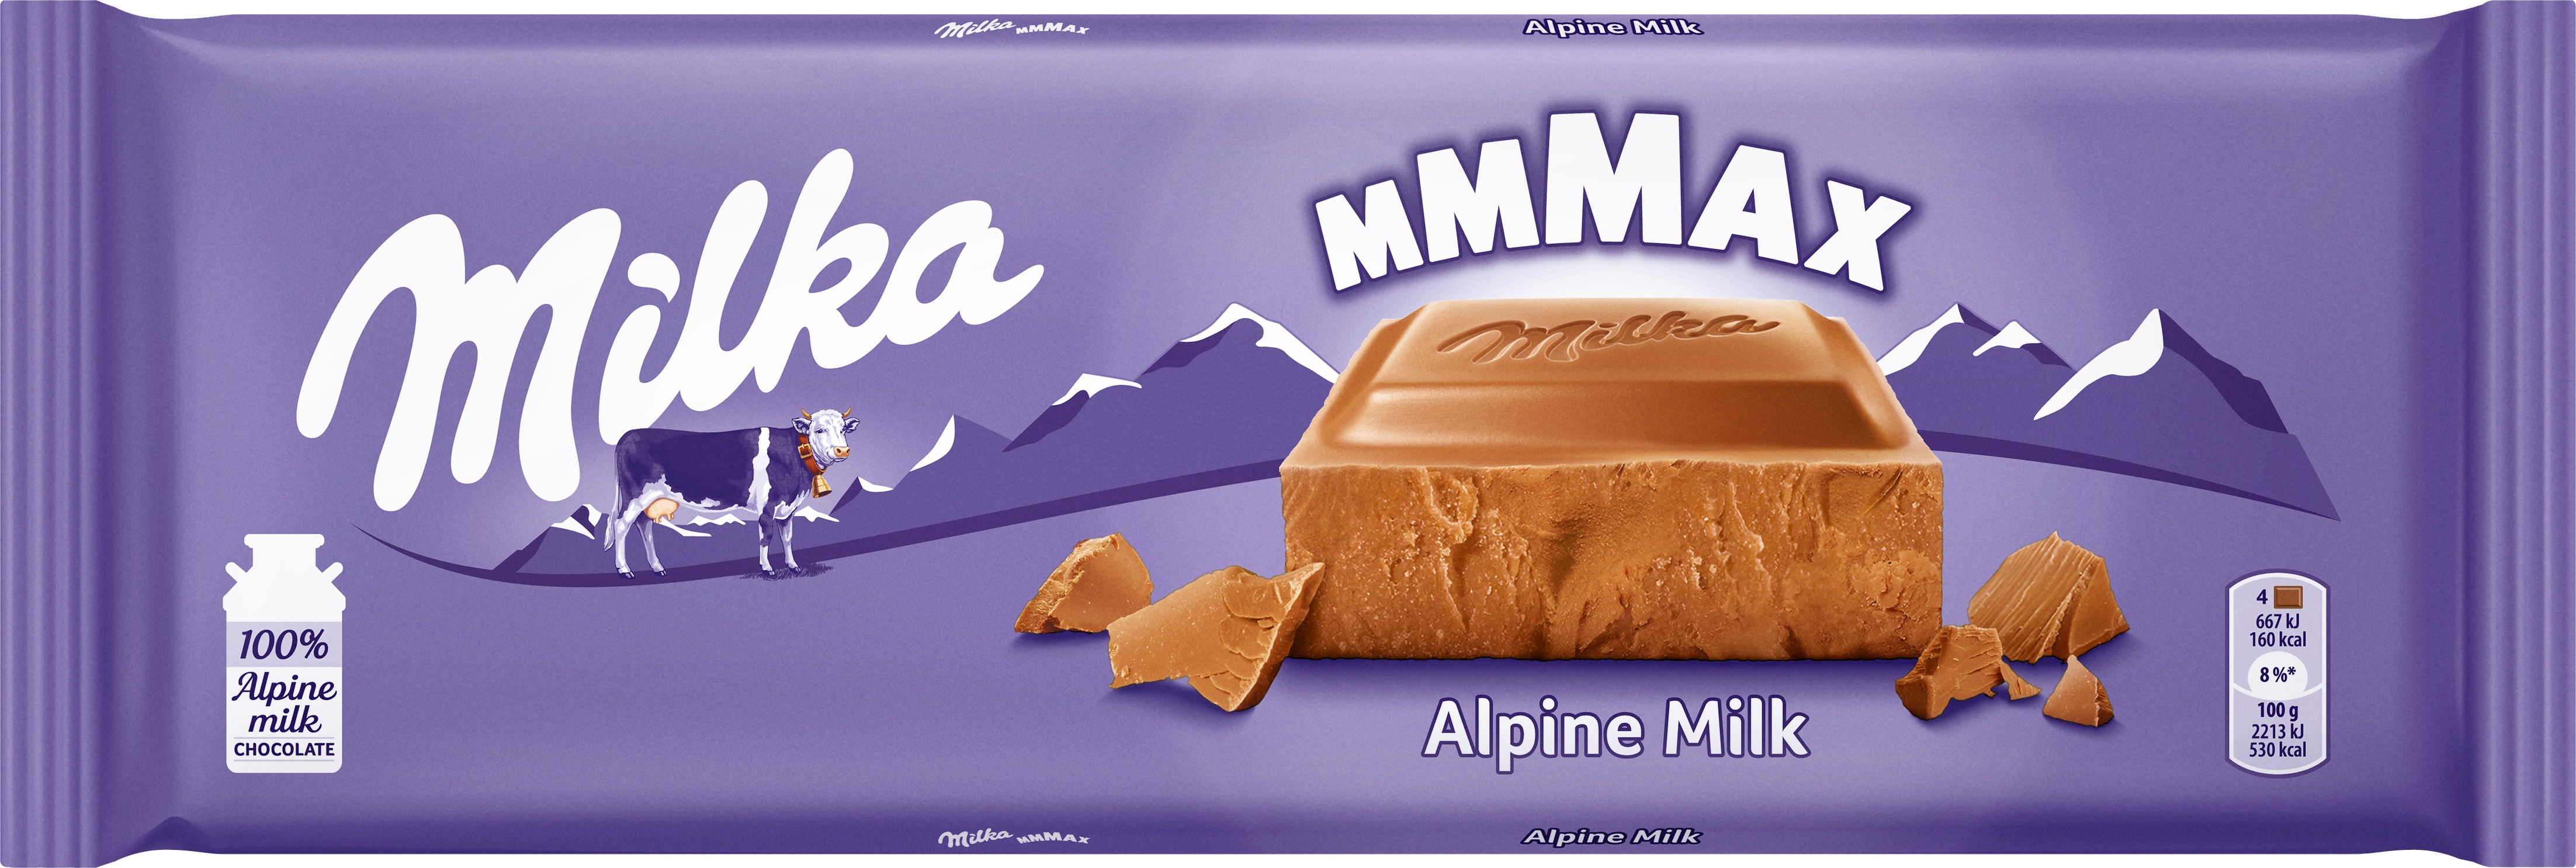 Slika za Čokolada Milka Alpine milk 300g